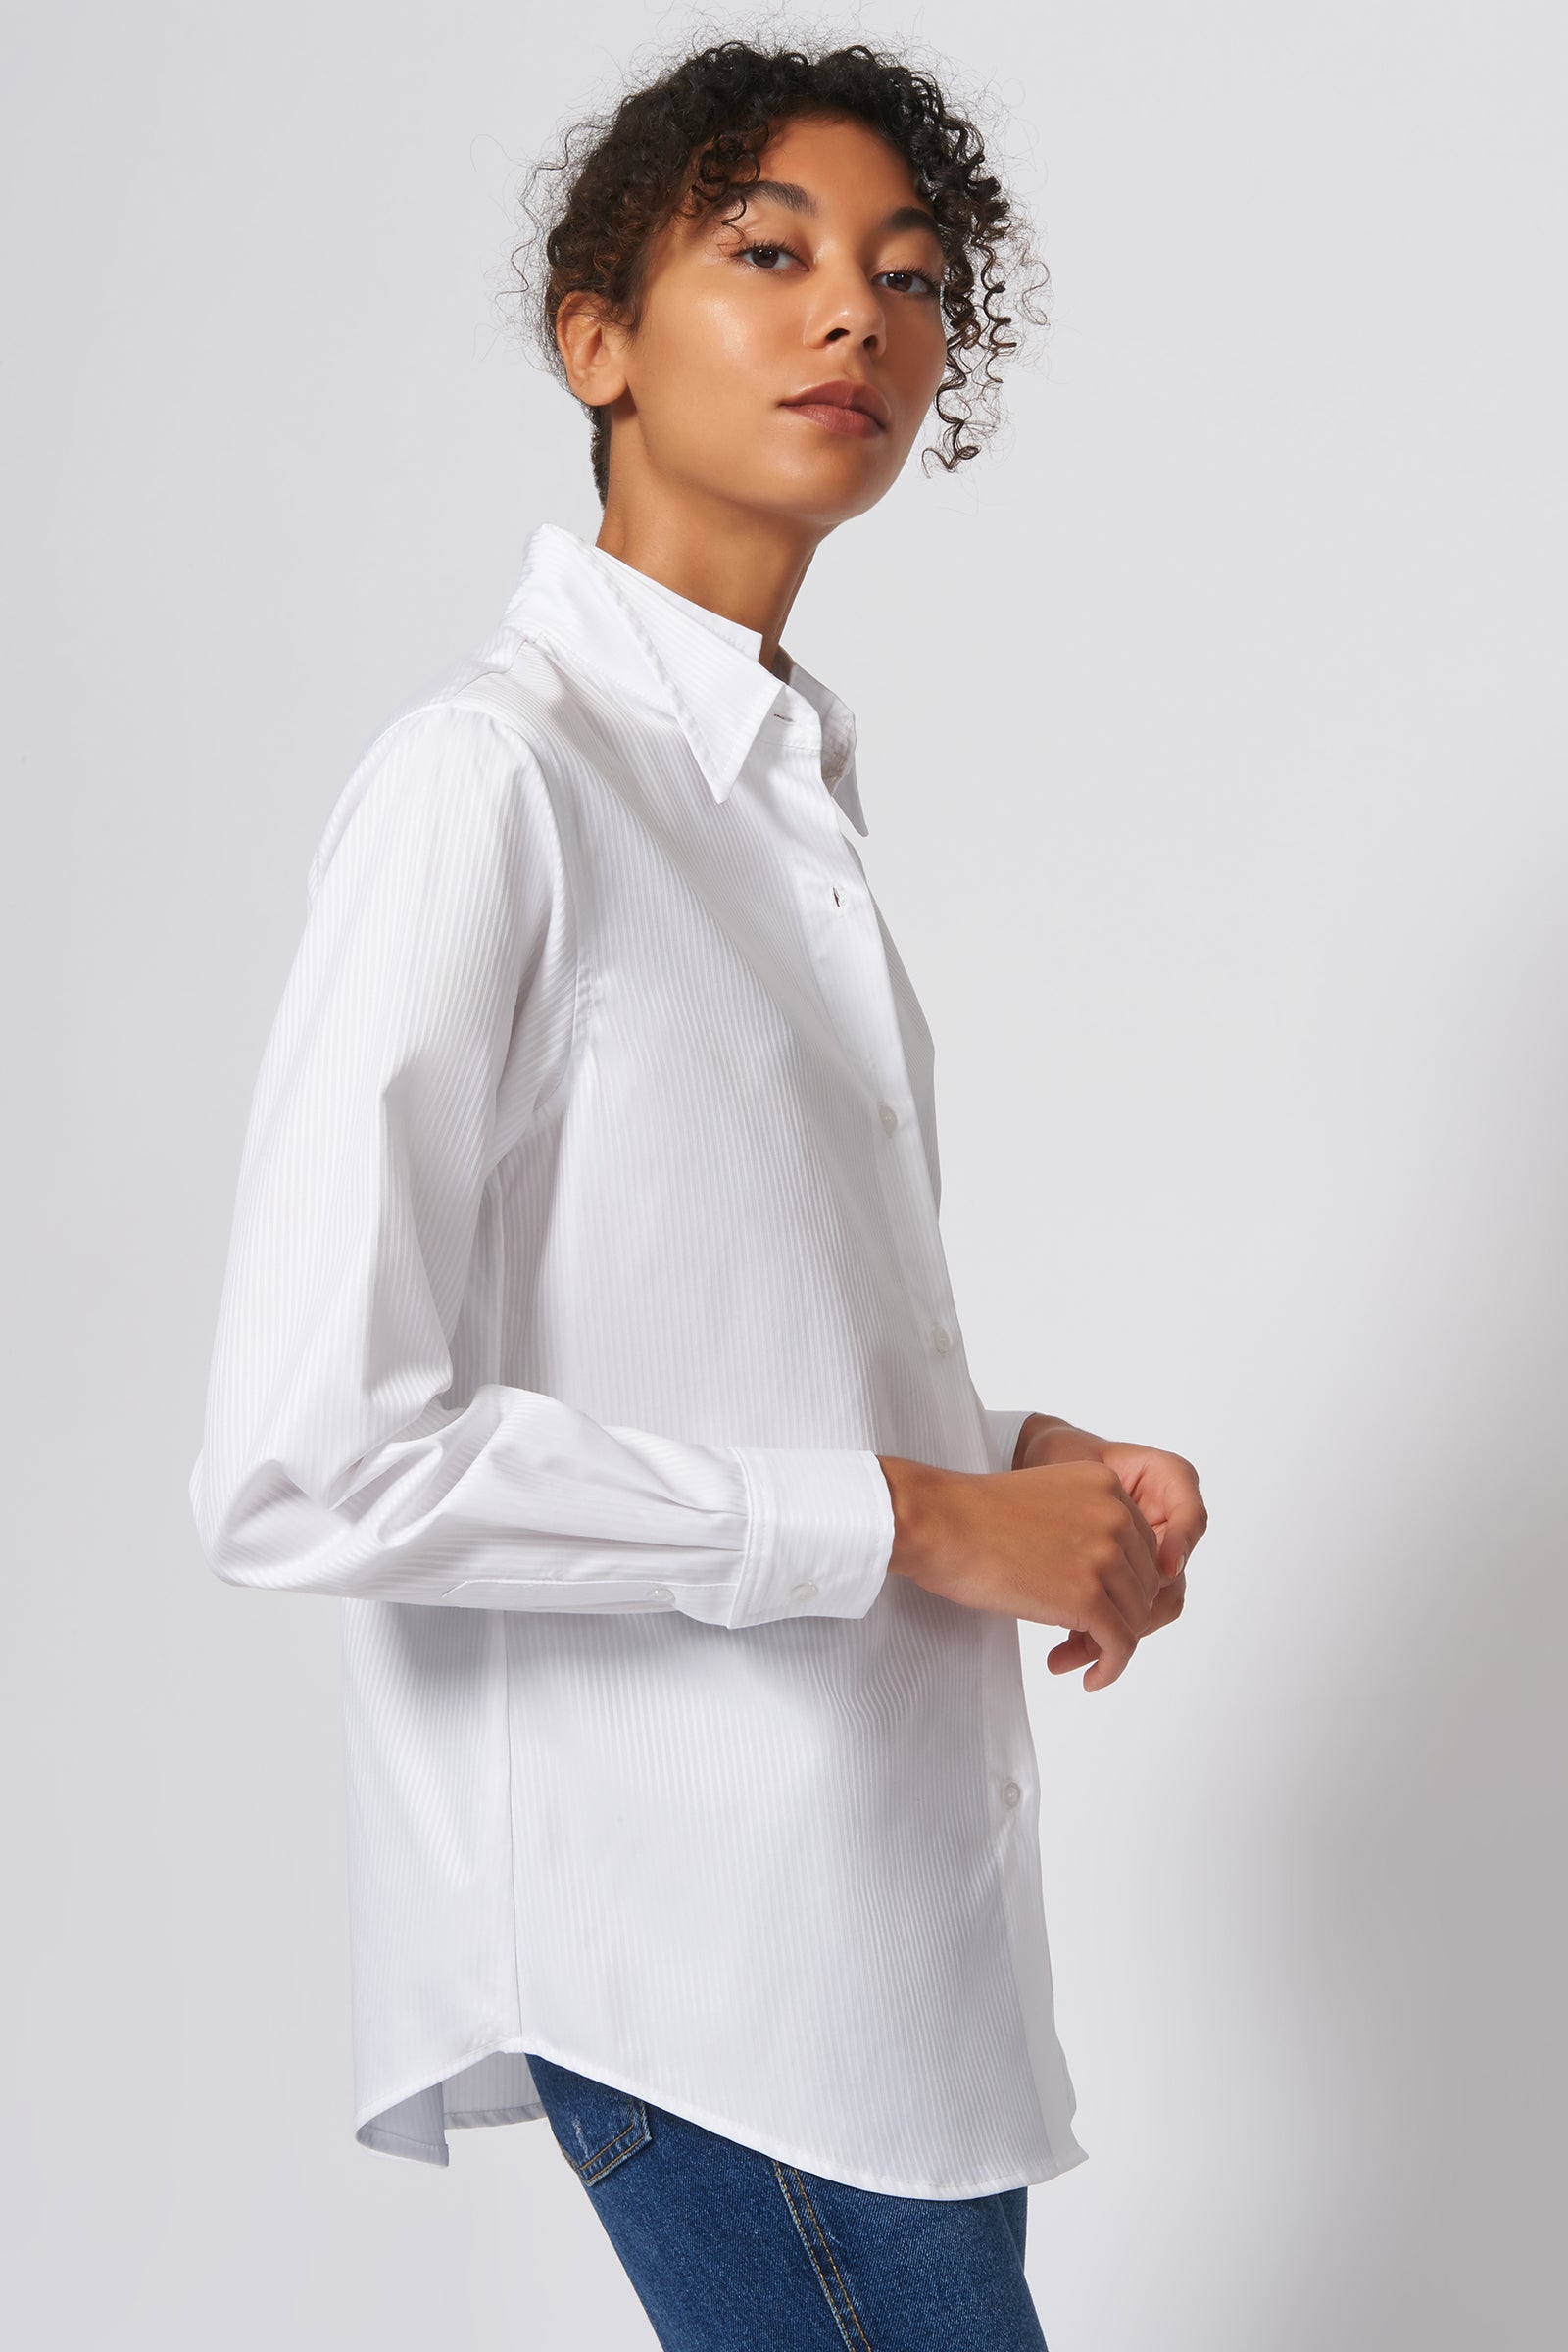 Kal Rieman Double Collar Shirt in White Satin Stripe on Model Side View